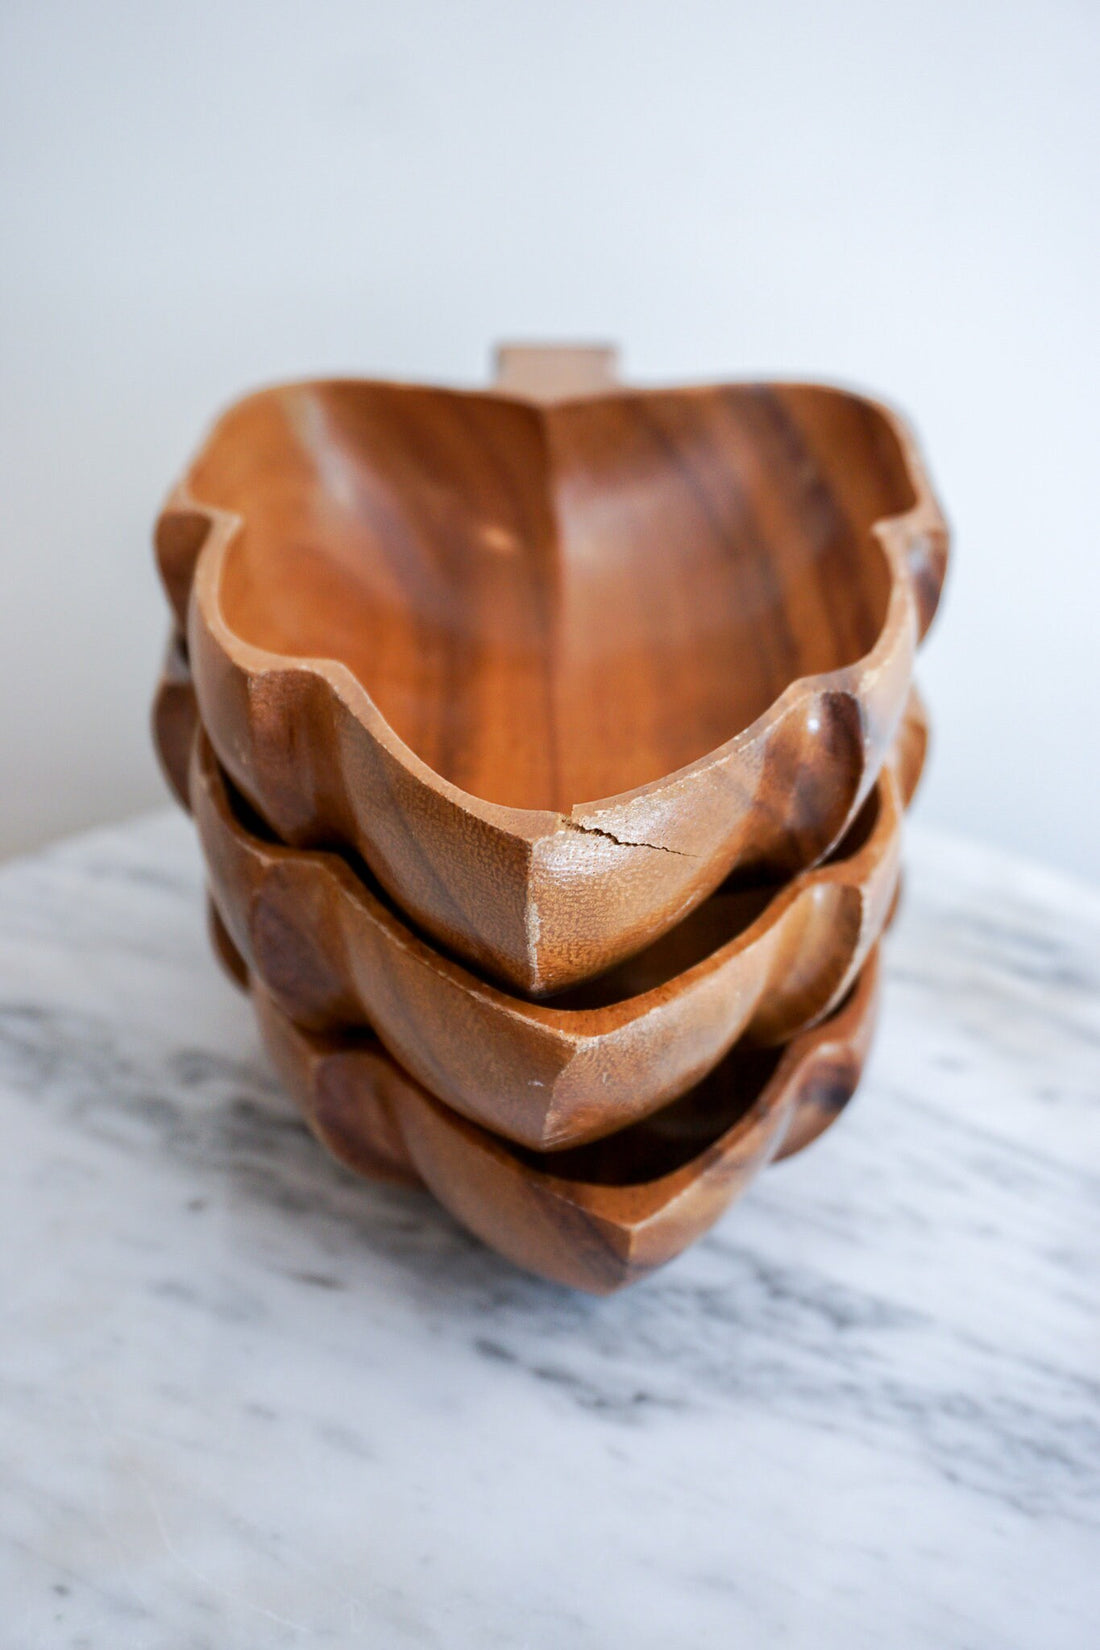 Monkey Pod Wood Artichoke Leaf Style Serving Bowls Set of Seven